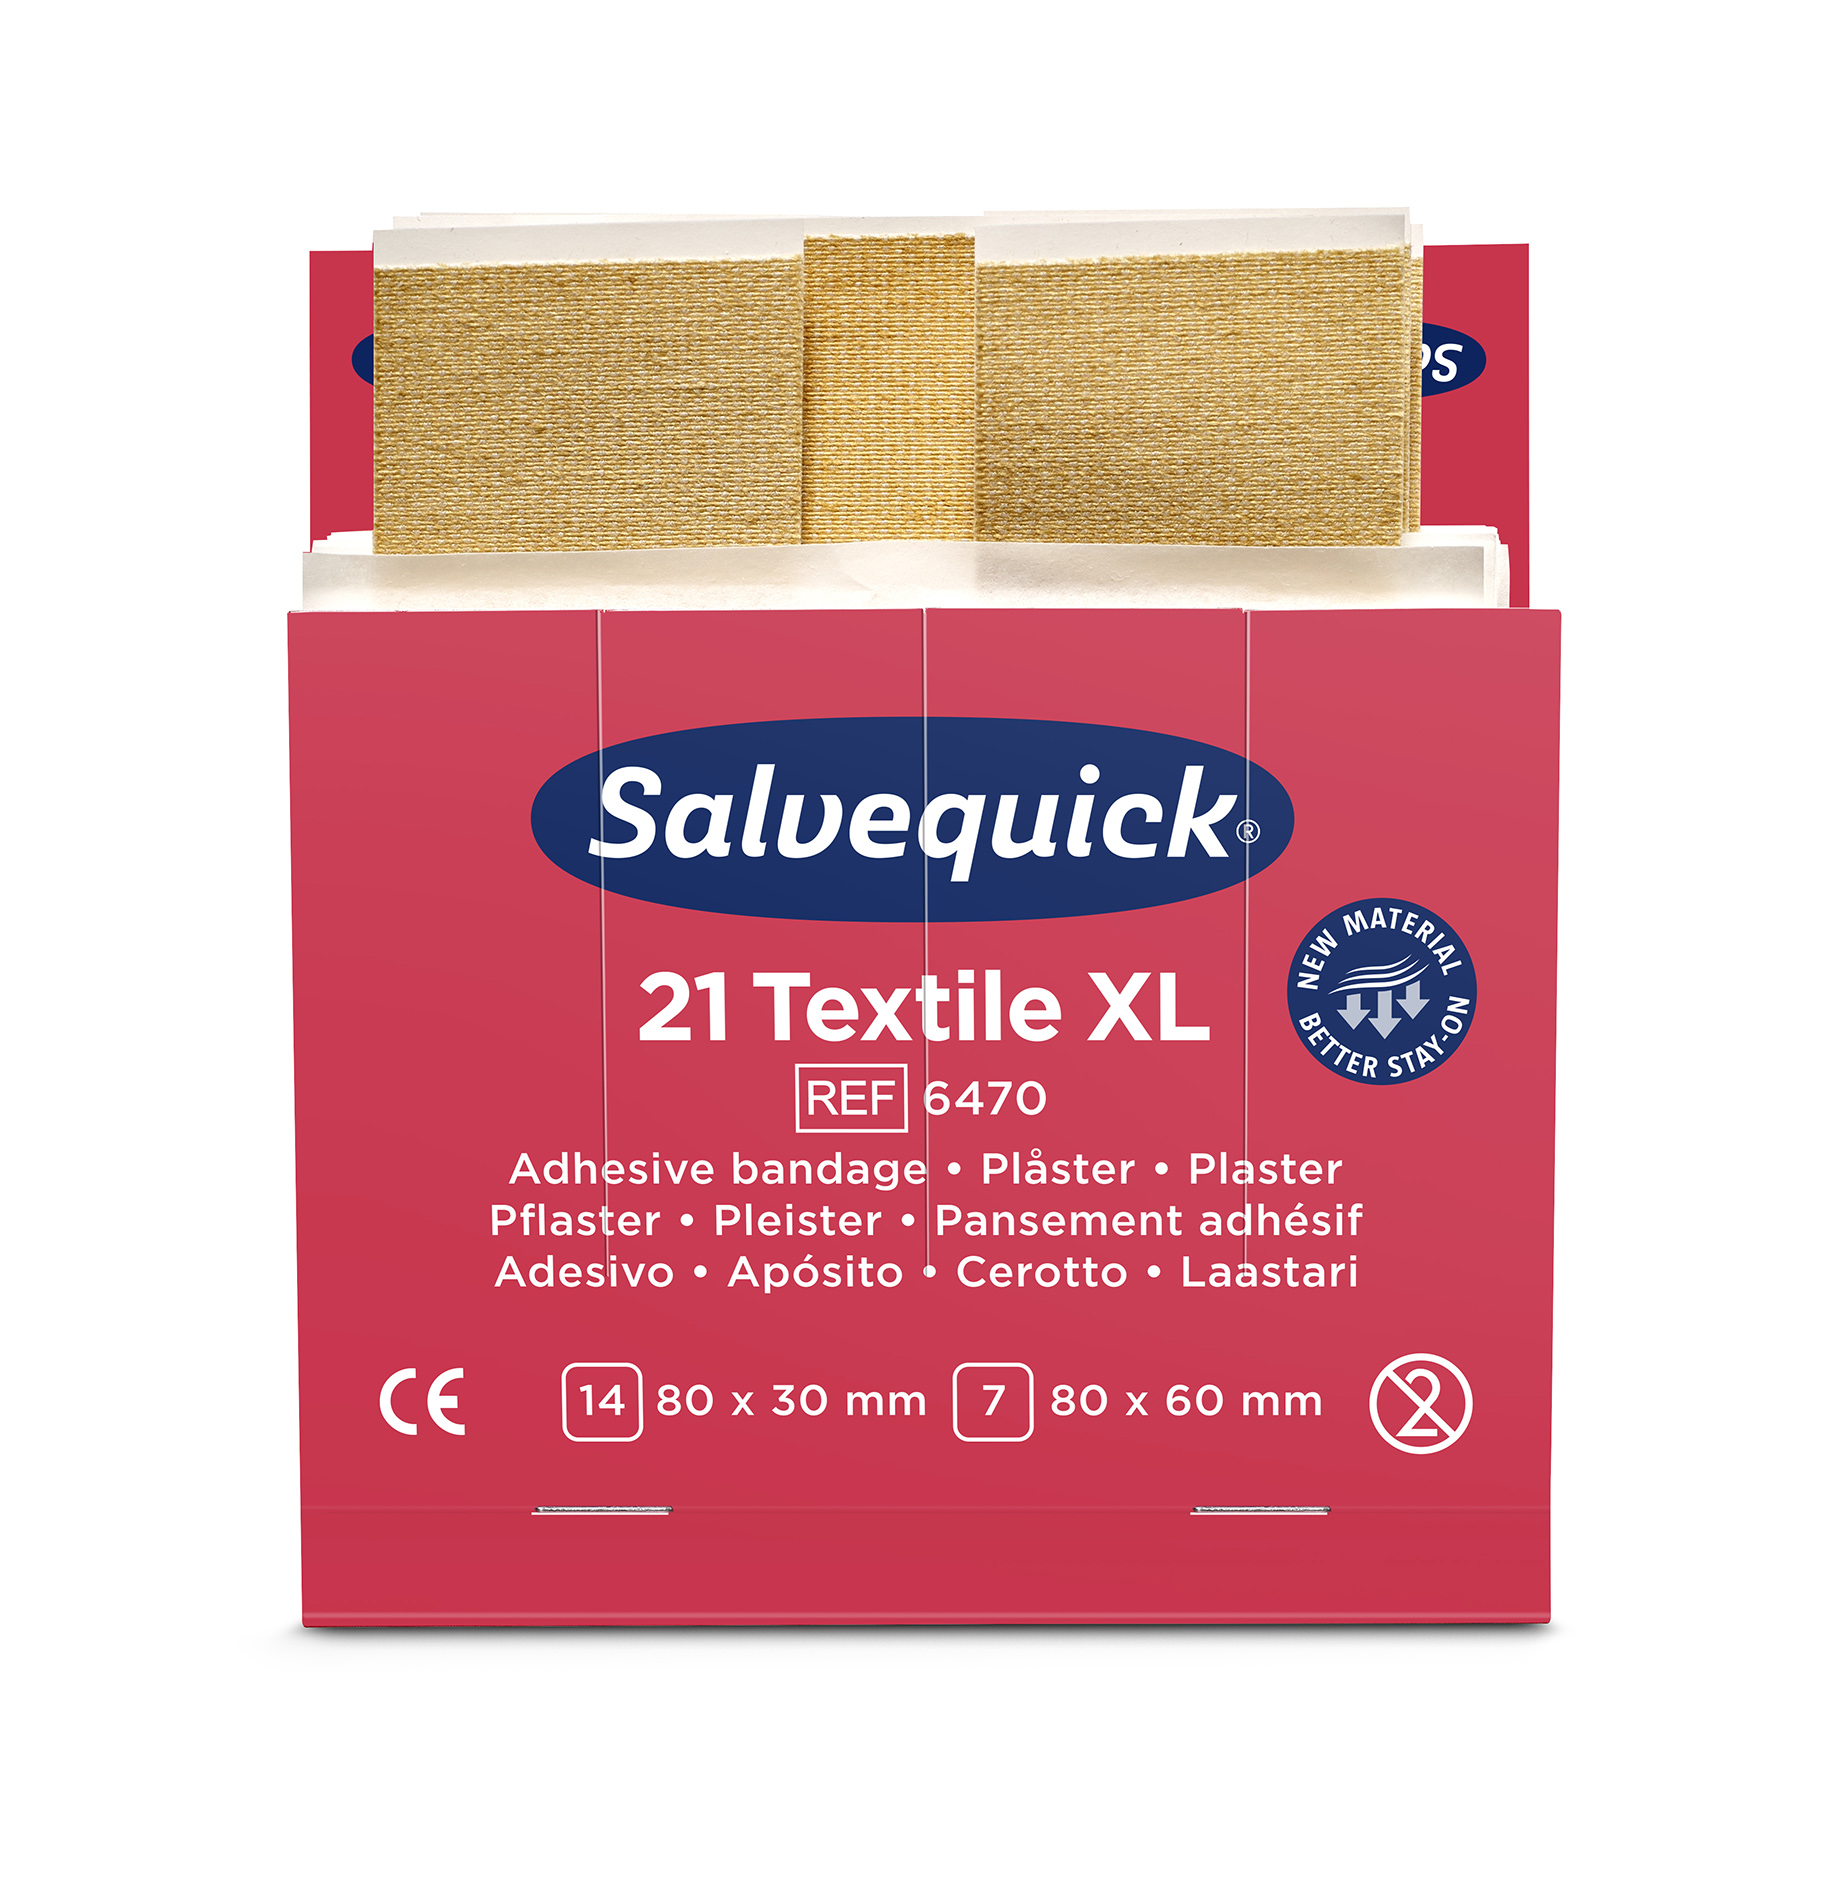 Salvequick Extra Große Textilpflaster - Refill 6470